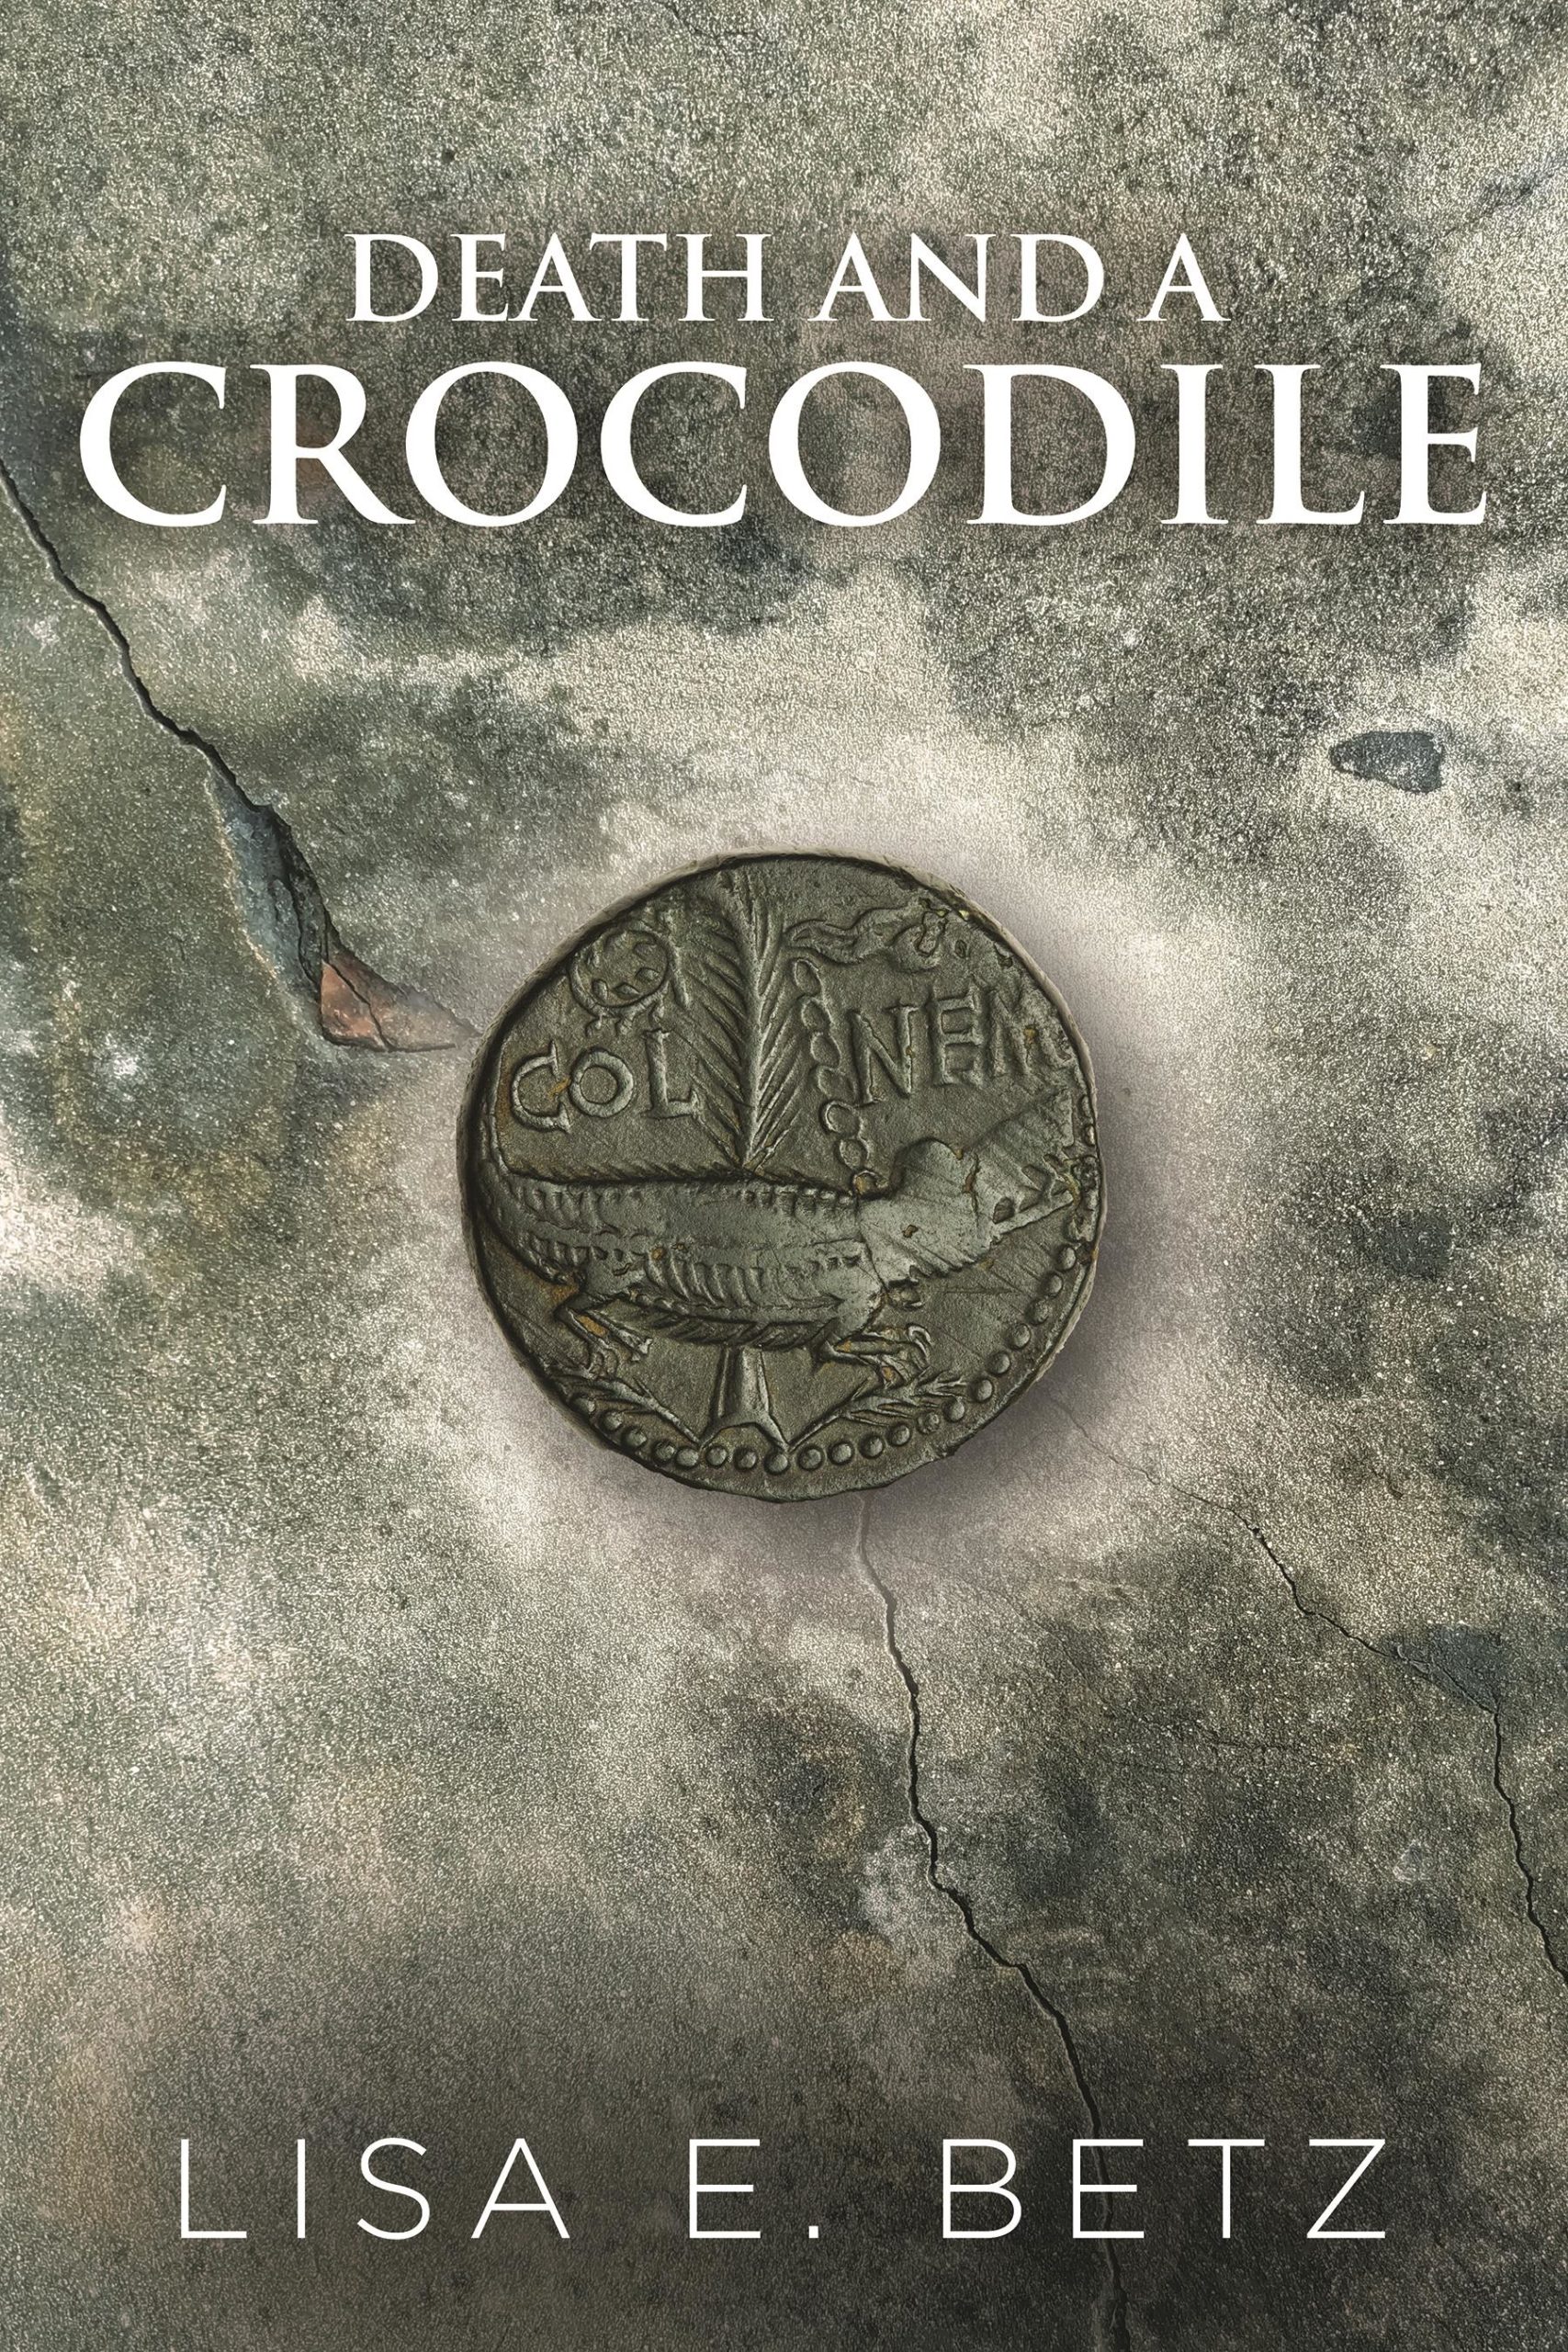 Death and a Crocodile by Lisa Betz